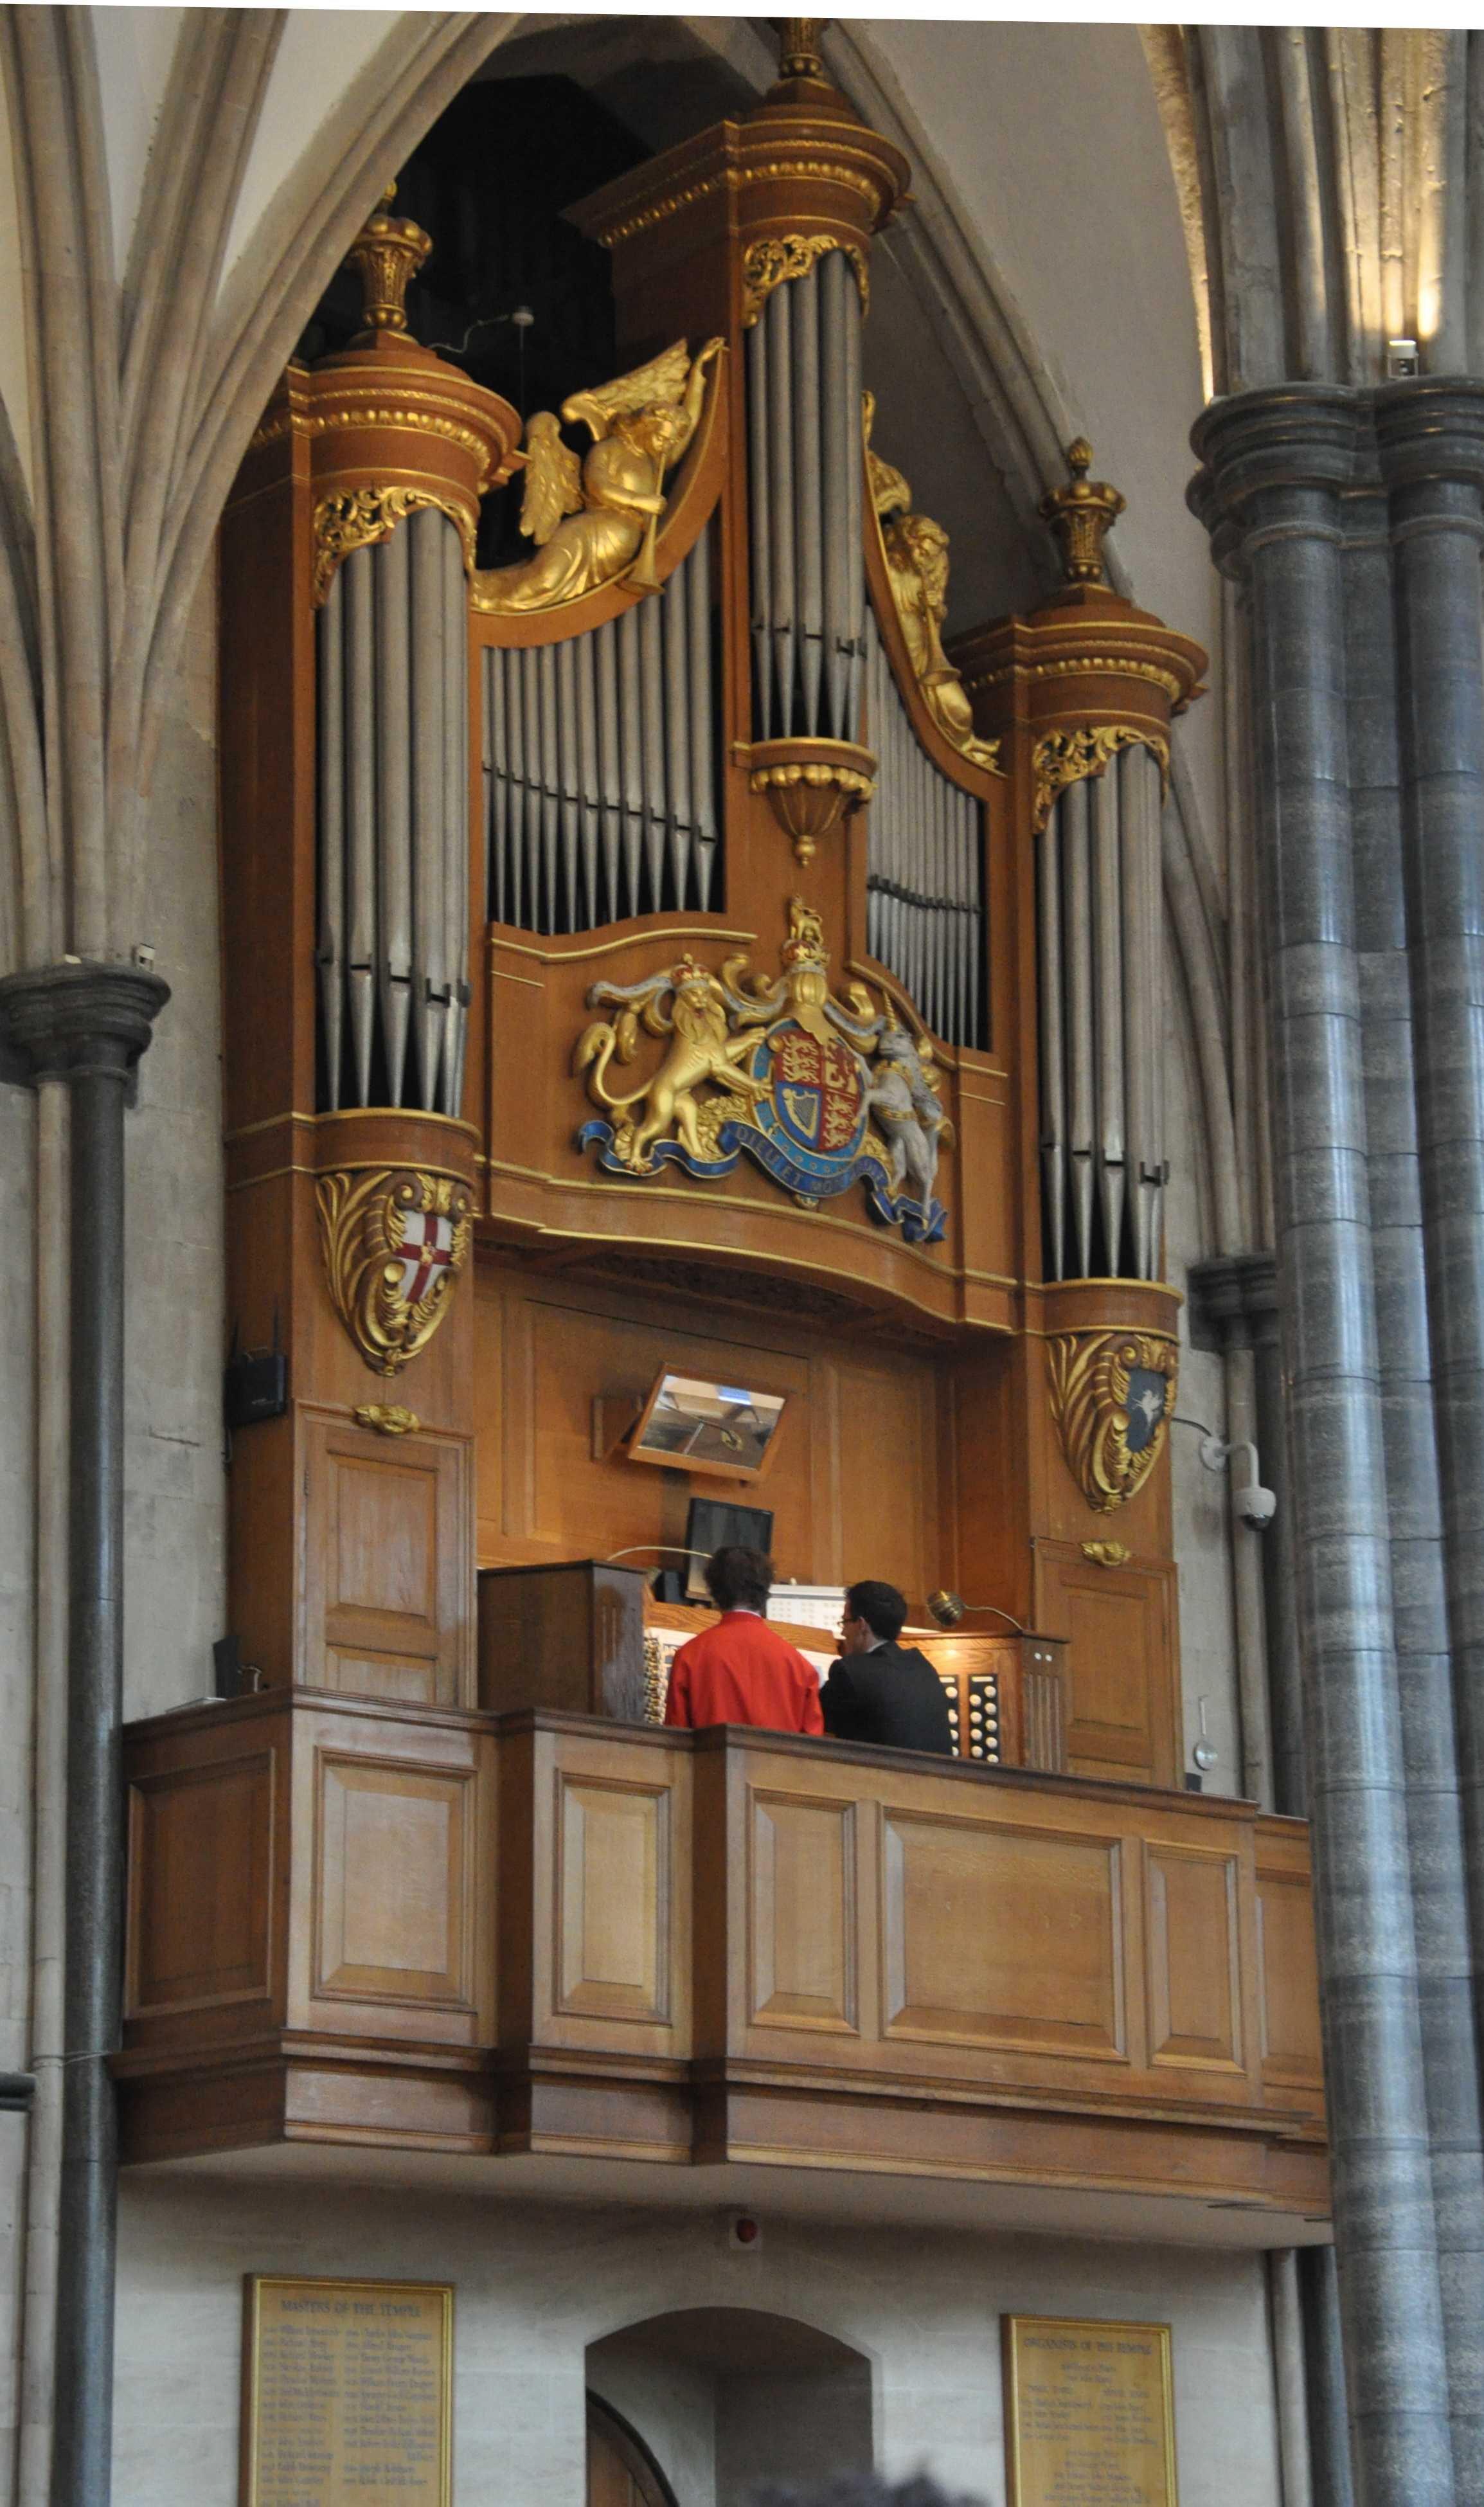 File:London Temple Church organ.jpg - Wikimedia Commons